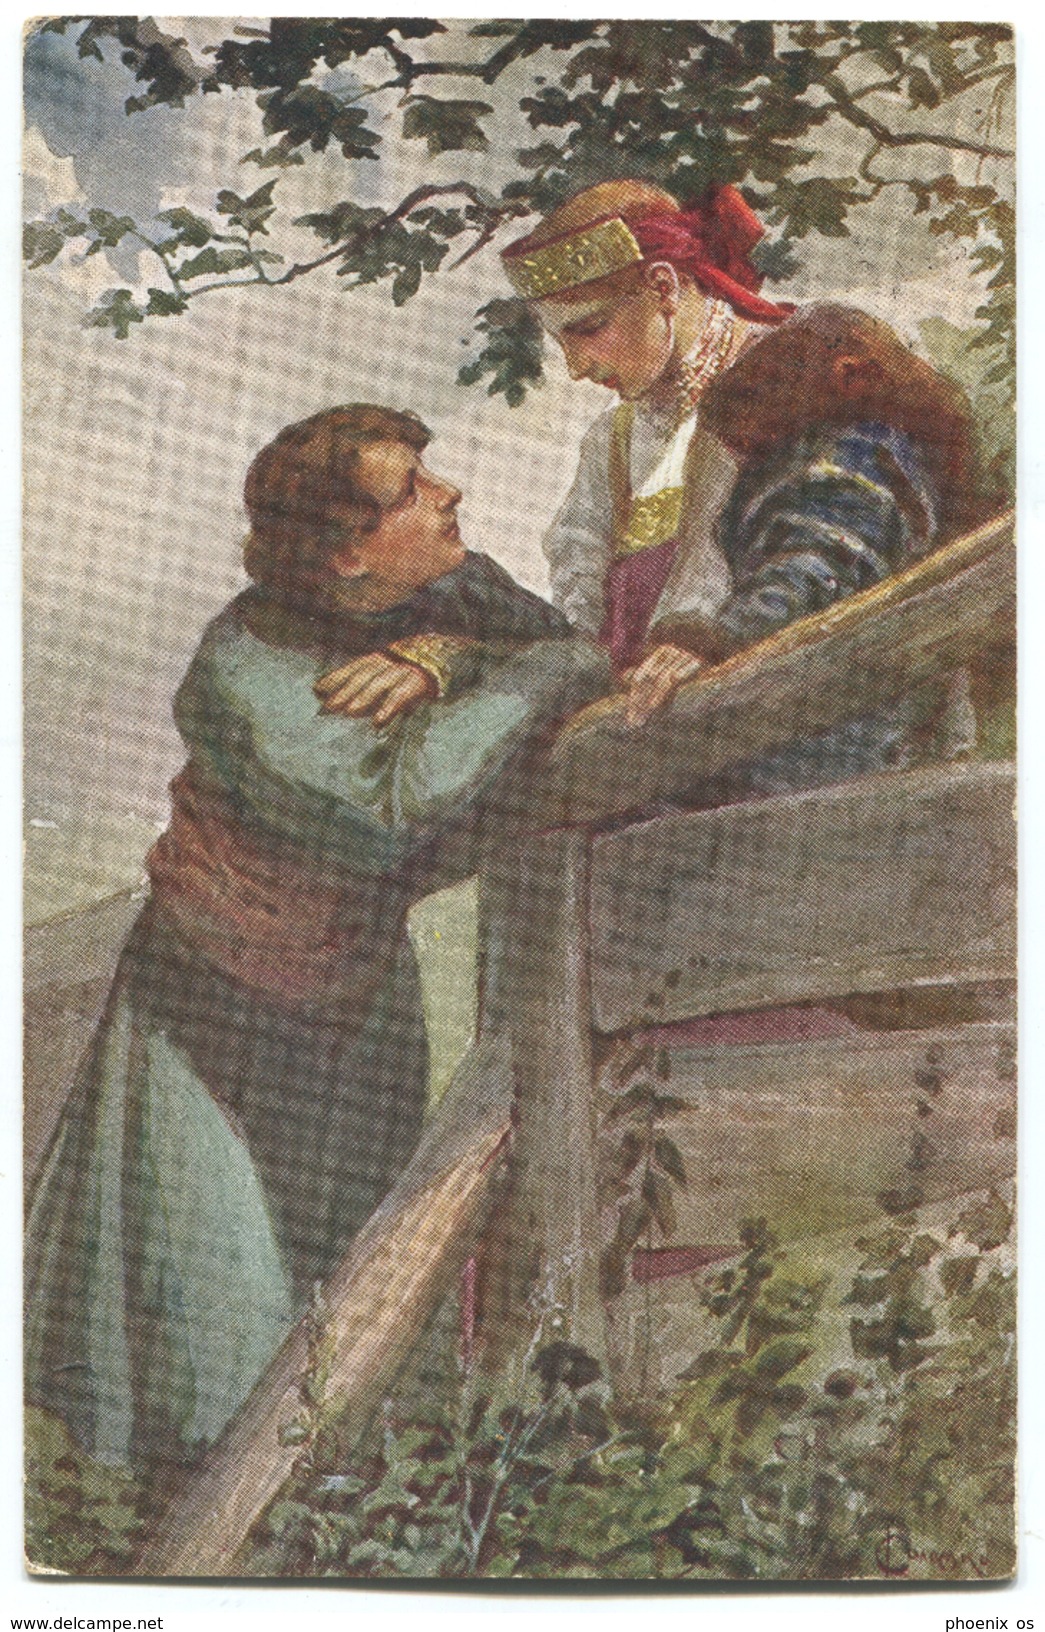 SERGEY SOLOMKO - RUSSIAN PAINTER, LOVE COUPLE, CENSURE WW1, 1917. - Solomko, S.